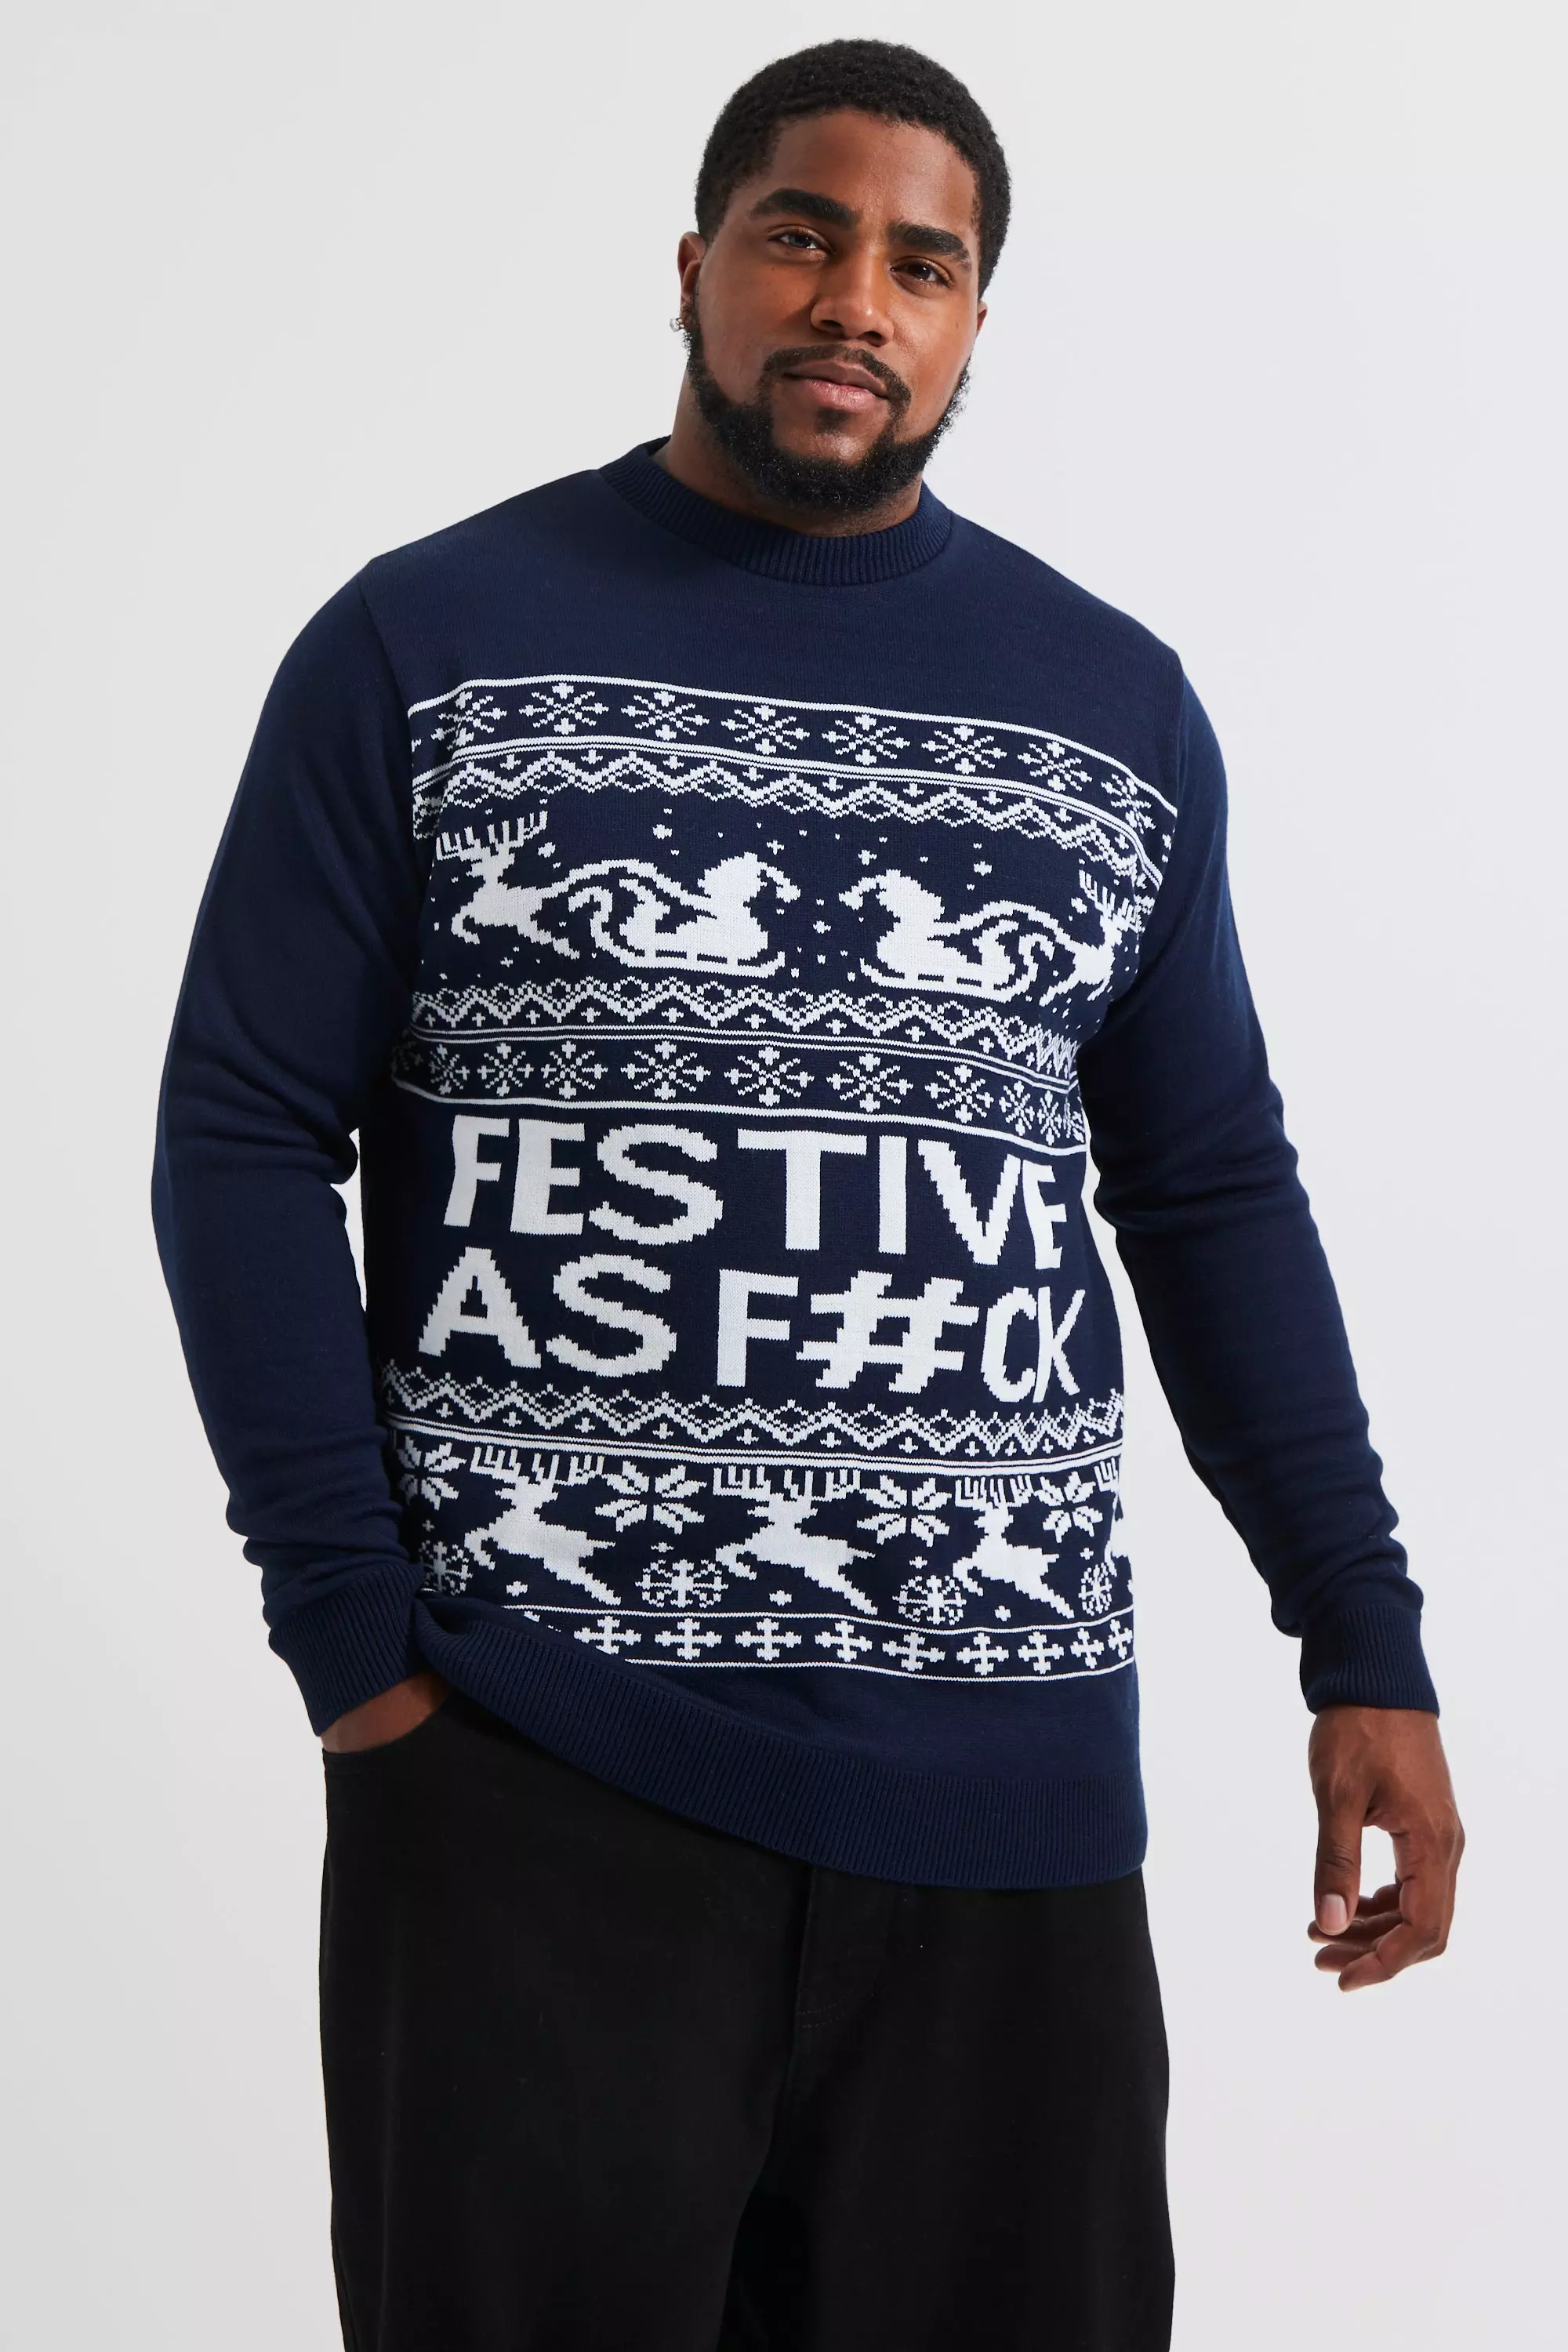 Plus Festive Slogan Christmas Sweater Navy